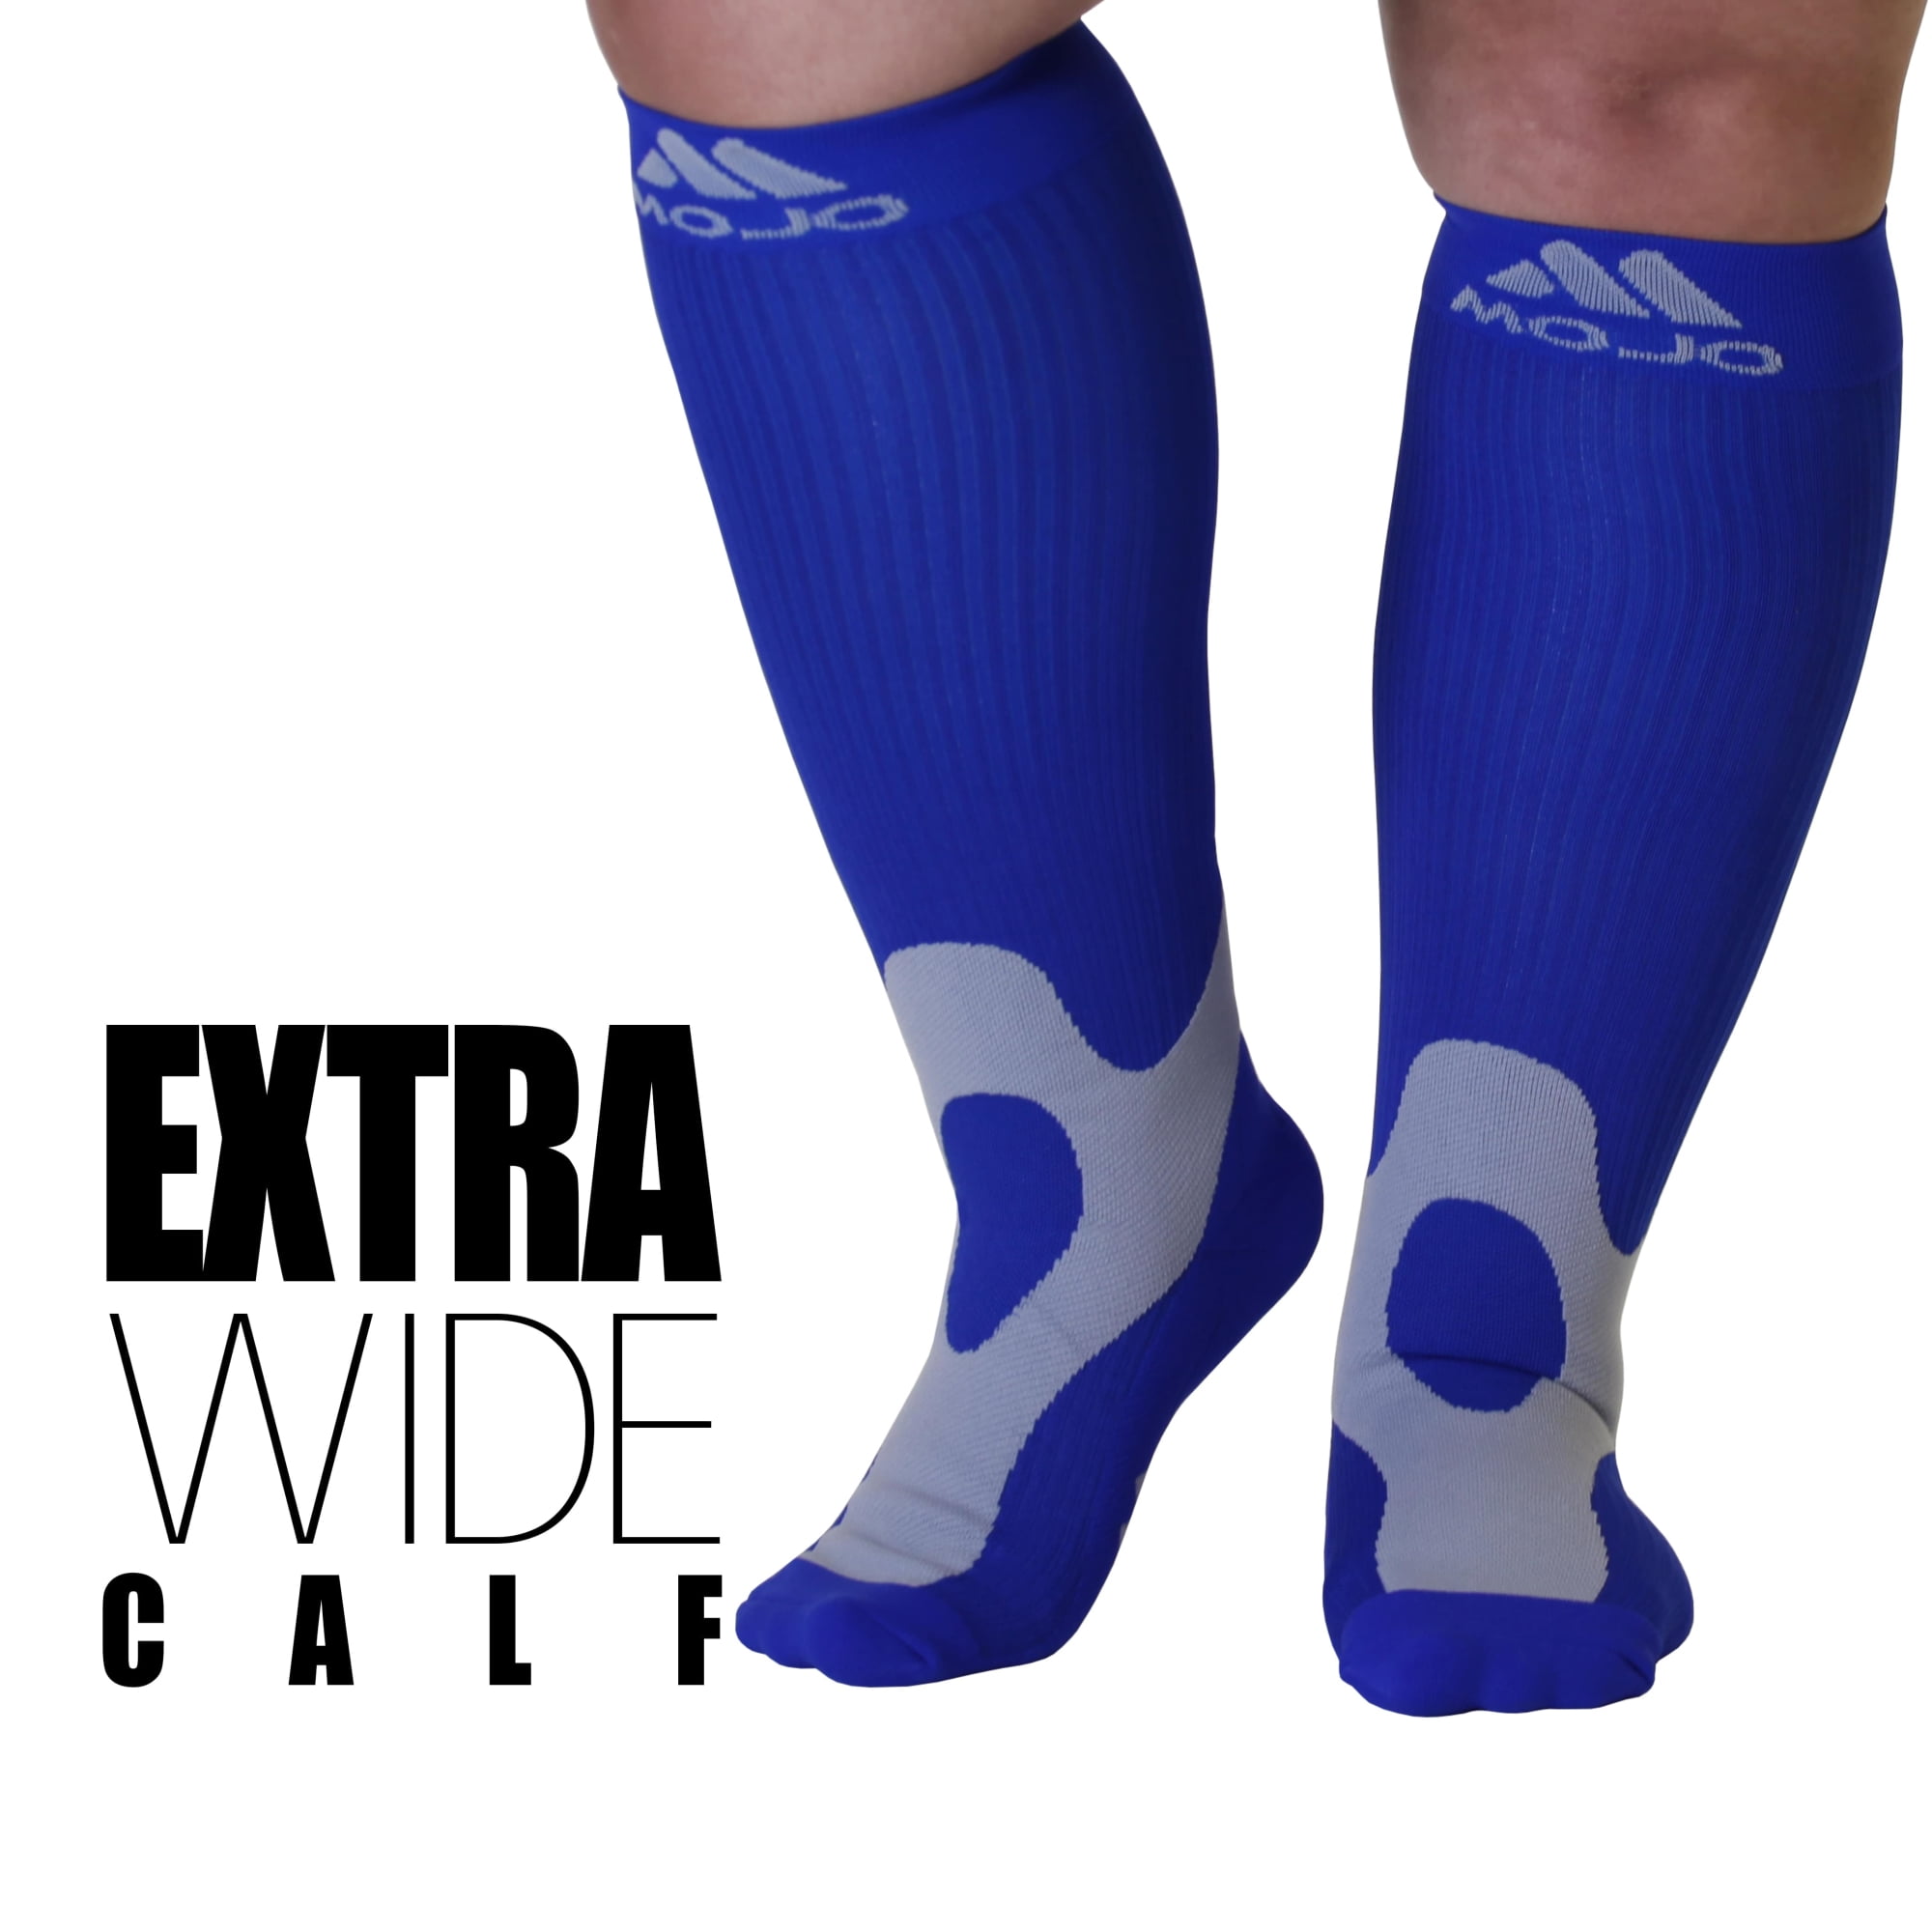 Triathlete Compression Socks Mojo Coolmax Recovery & Performance Sports Compression Socks Unisex